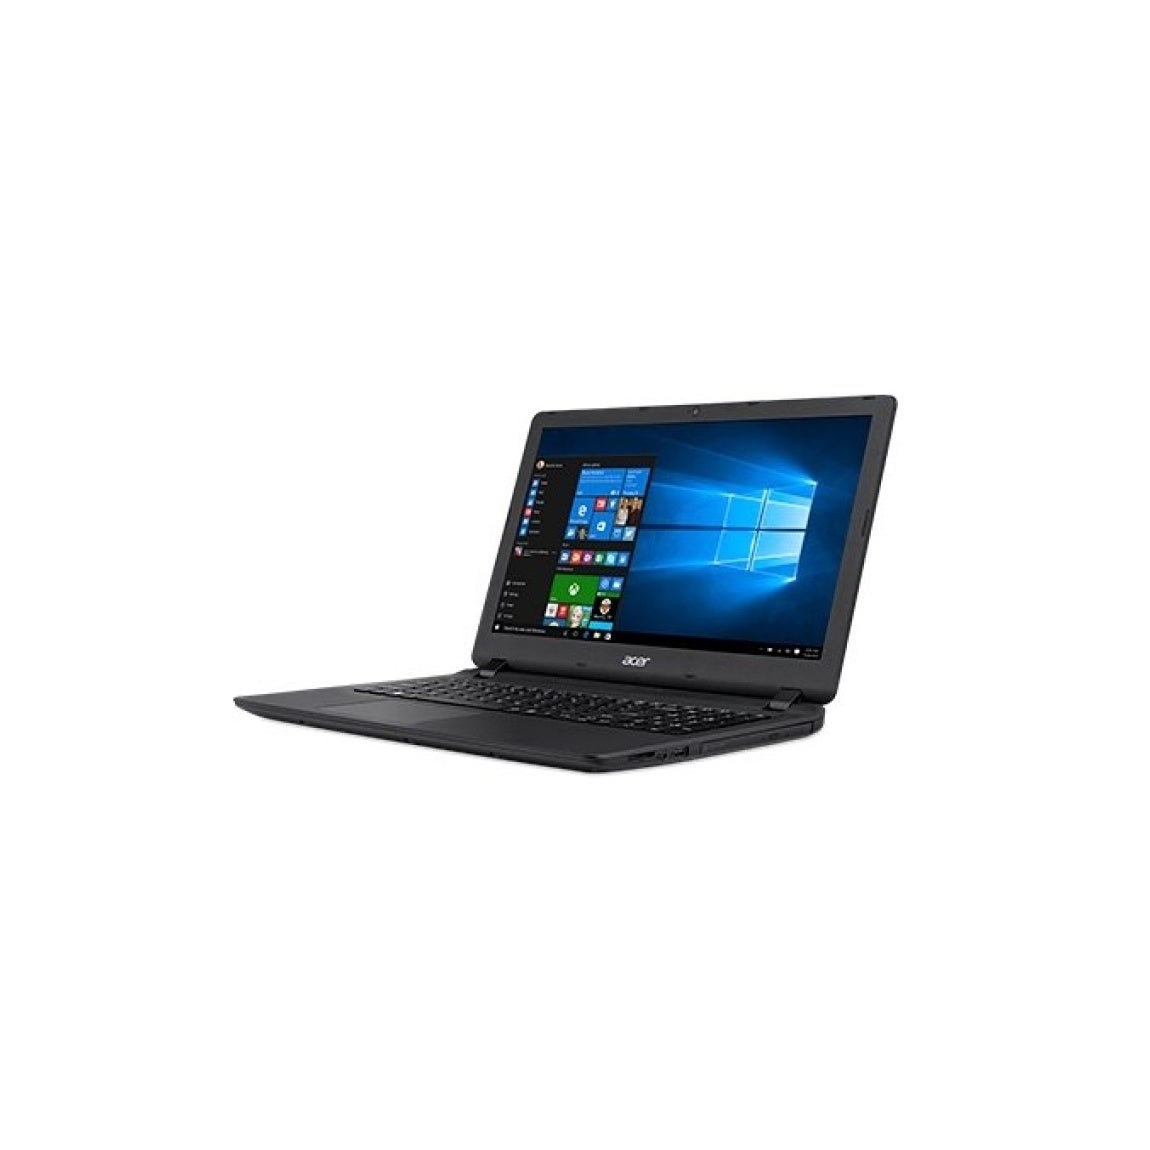 Acer Aspire ES1 432 P2CG NXGFSSM004 14inch Laptop